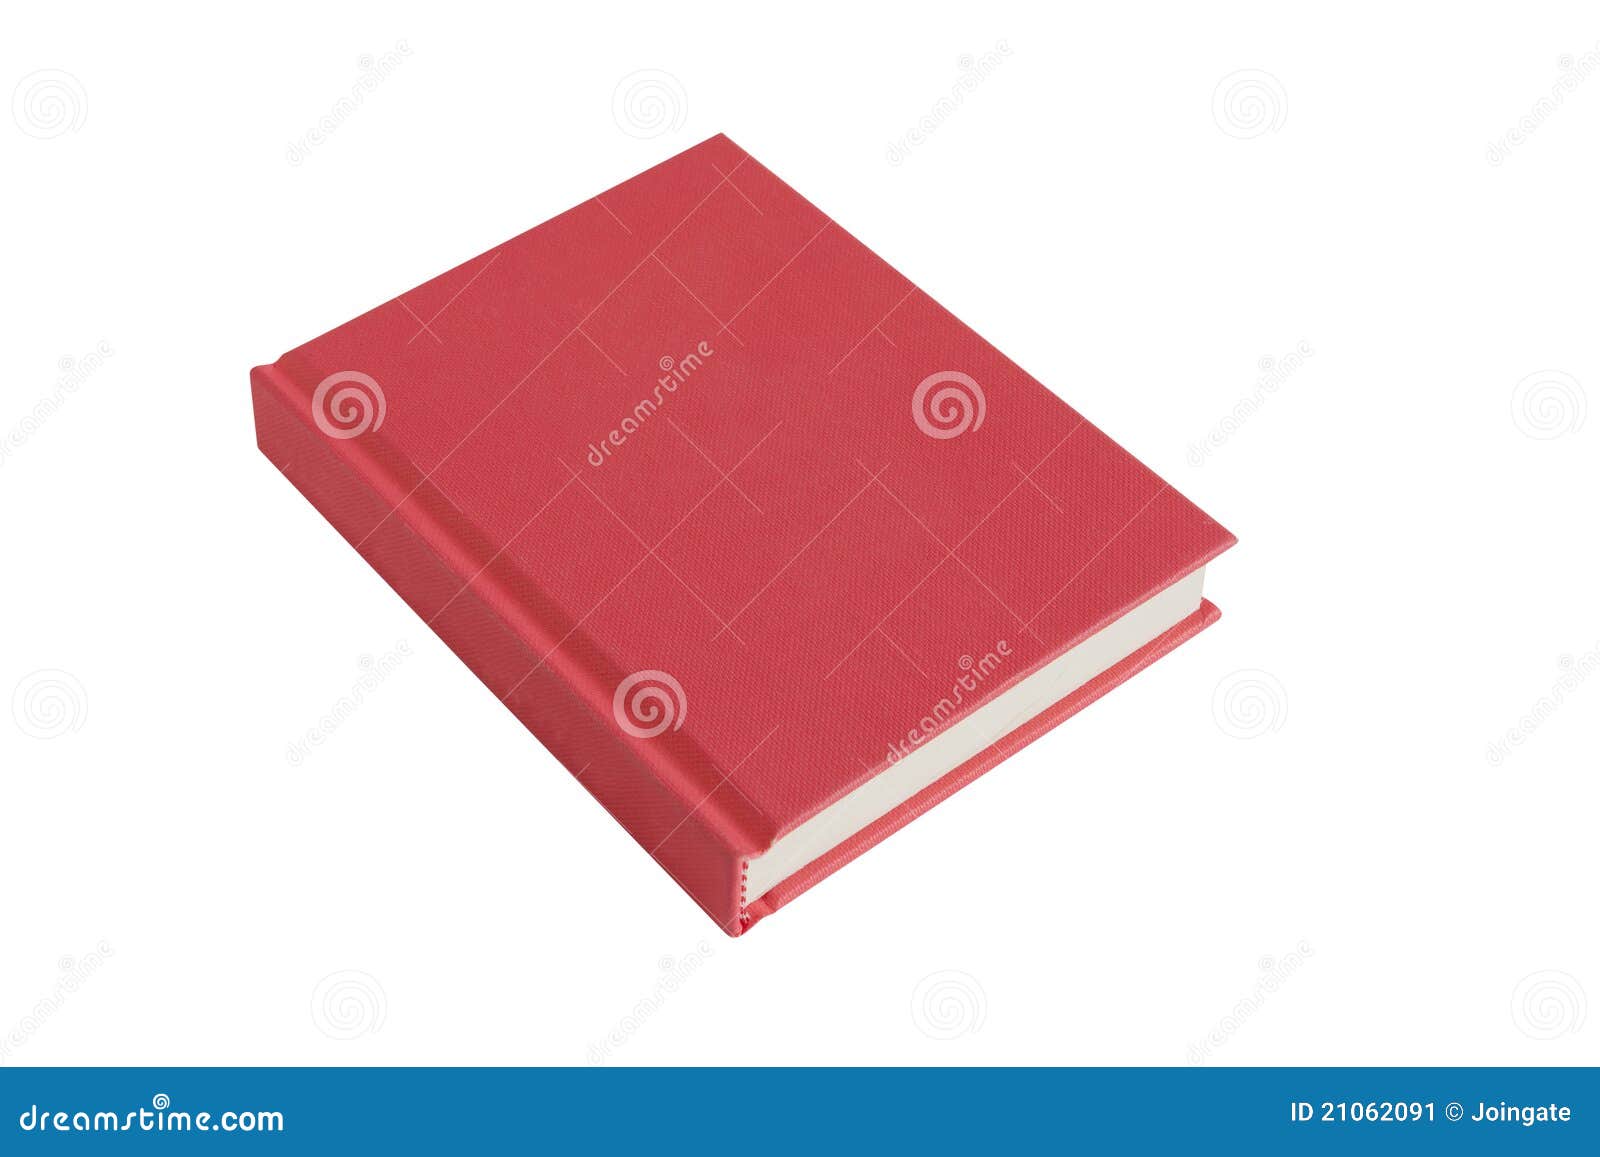 red hardback book on white background